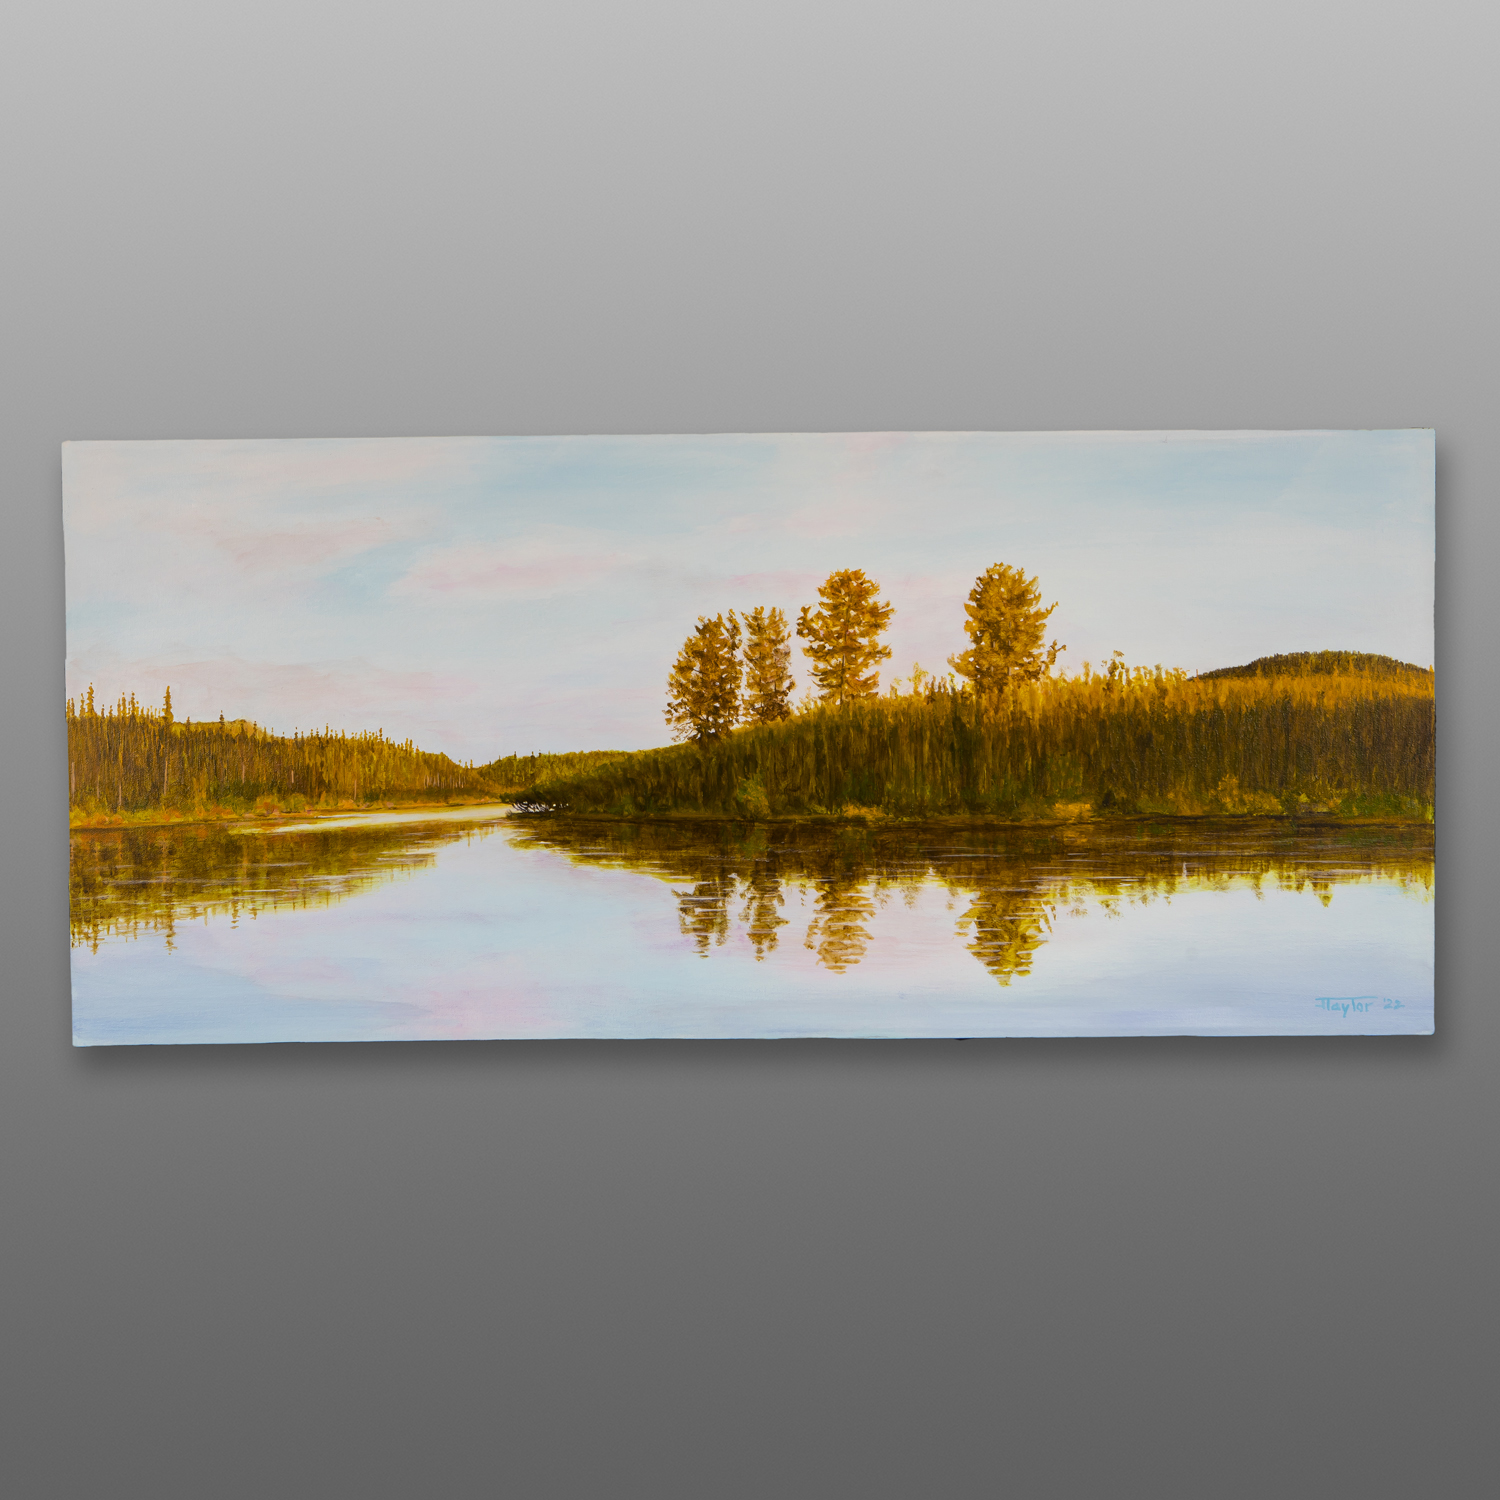 Pines of Wilson Bay
Jean Taylor
Tlingit
Acrylic on canvas
36" x 16"
$1450